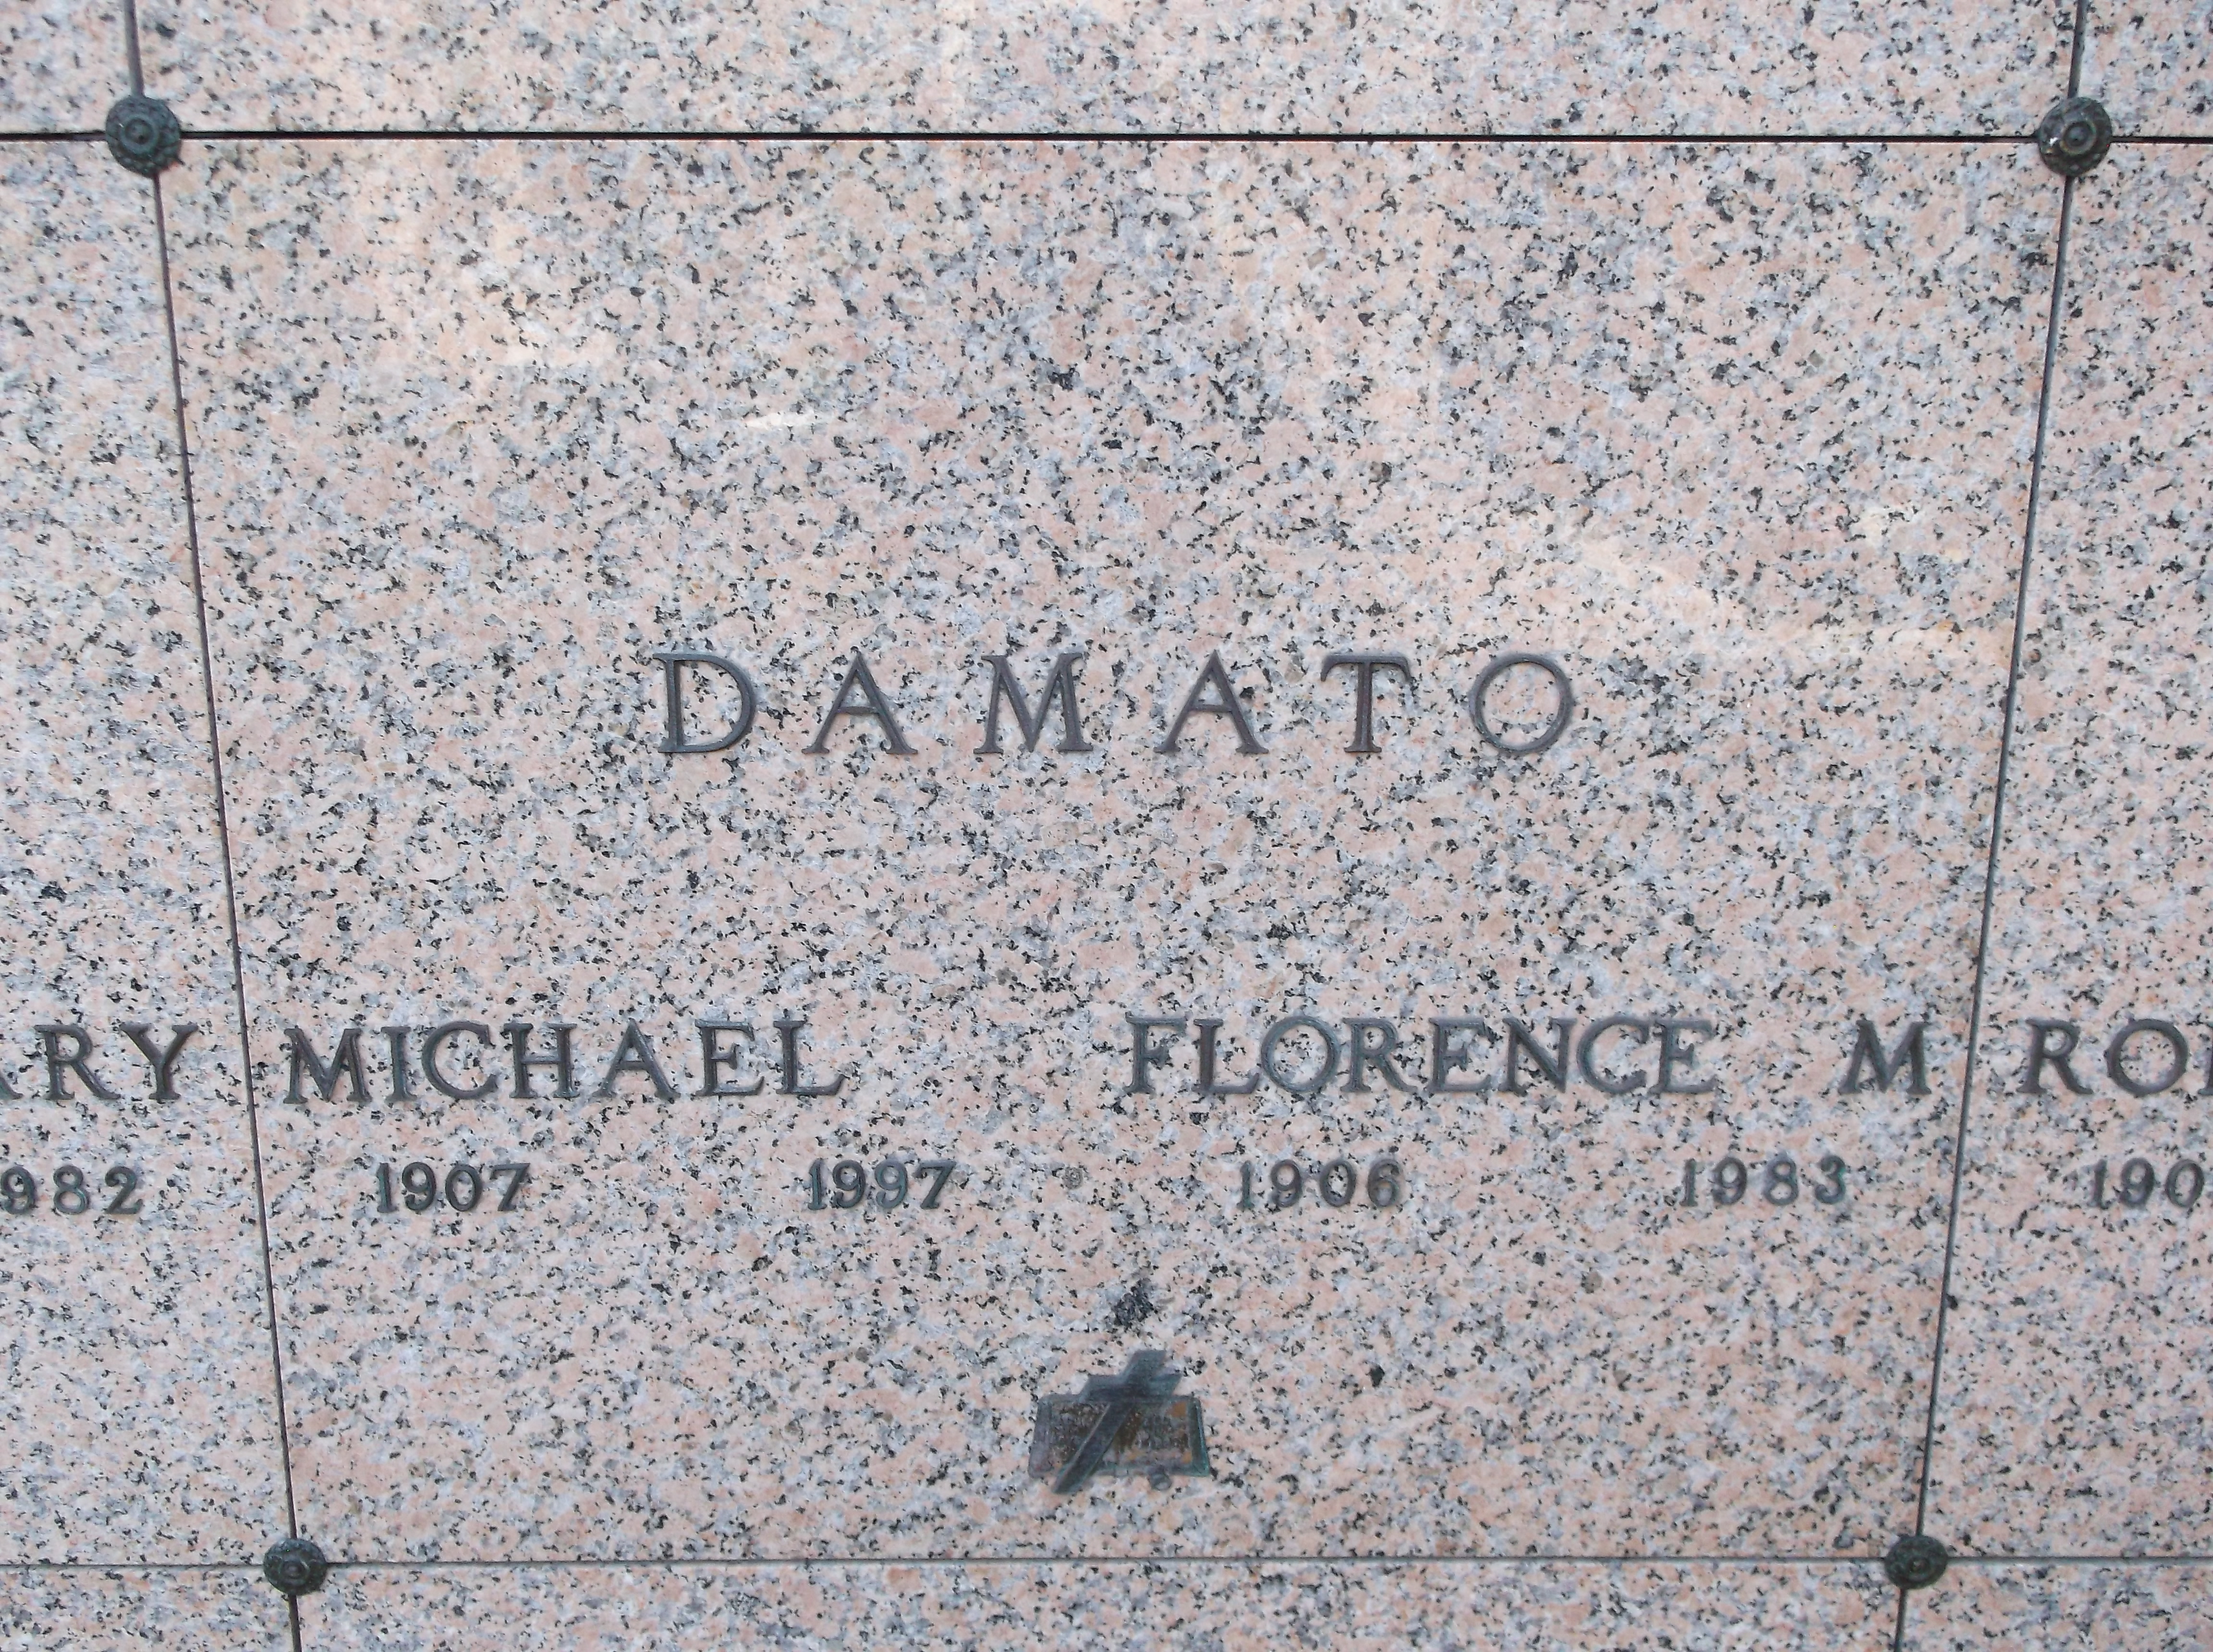 Michael Damato